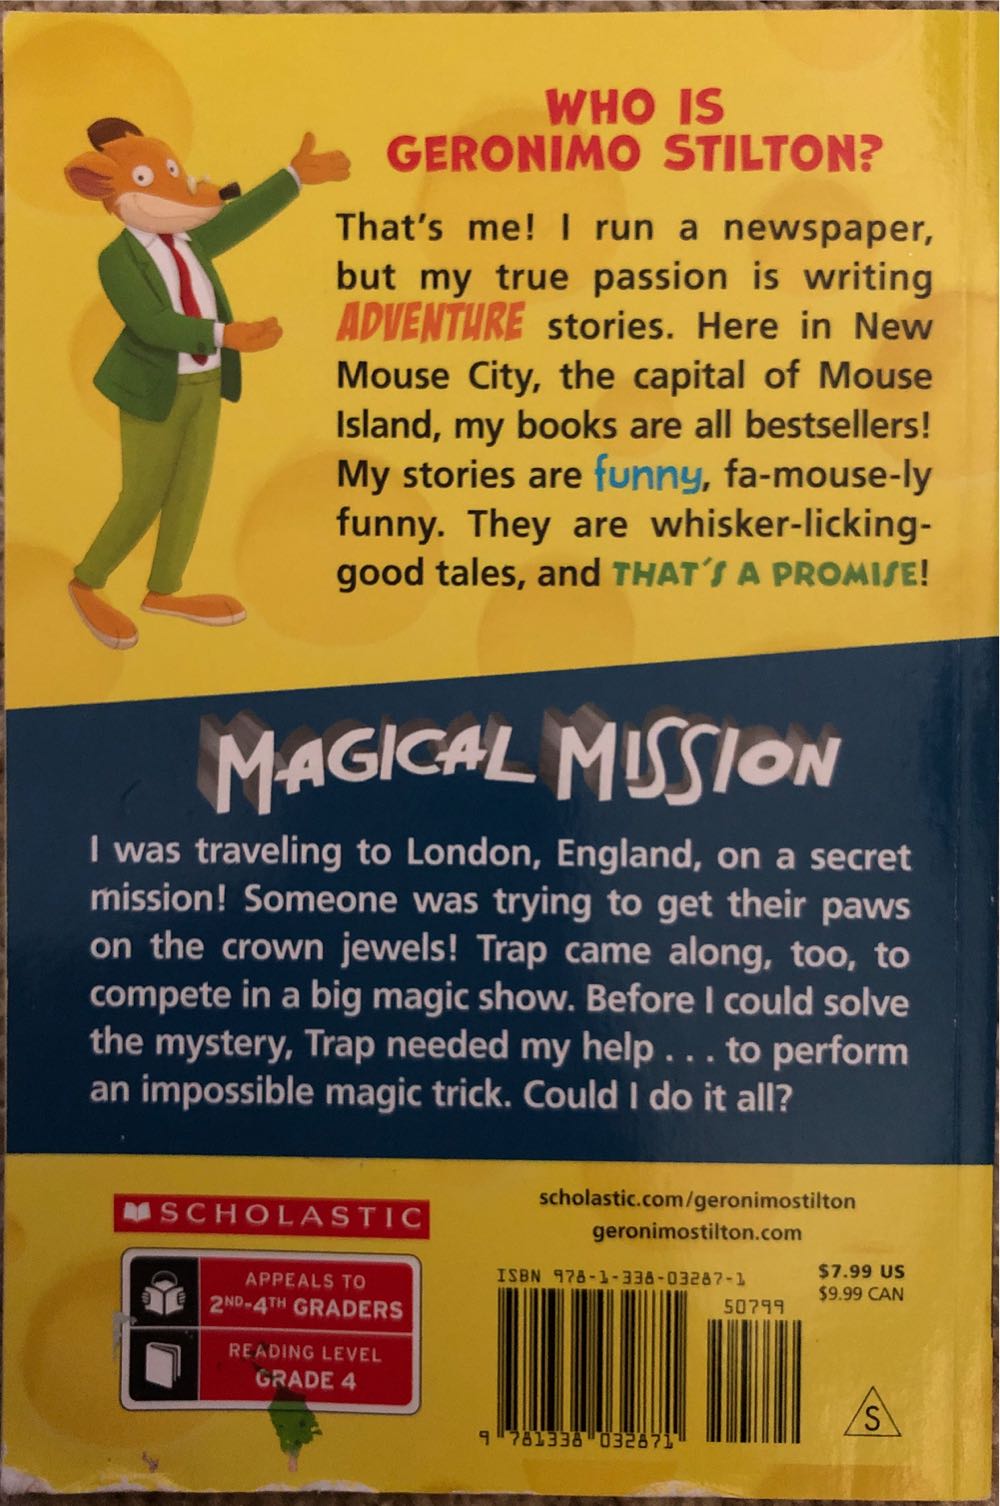 Geronimo Stilton #64: Magical Mission - Geronimo Stilton (Scholastic Inc. - Paperback) book collectible [Barcode 9781338032871] - Main Image 3